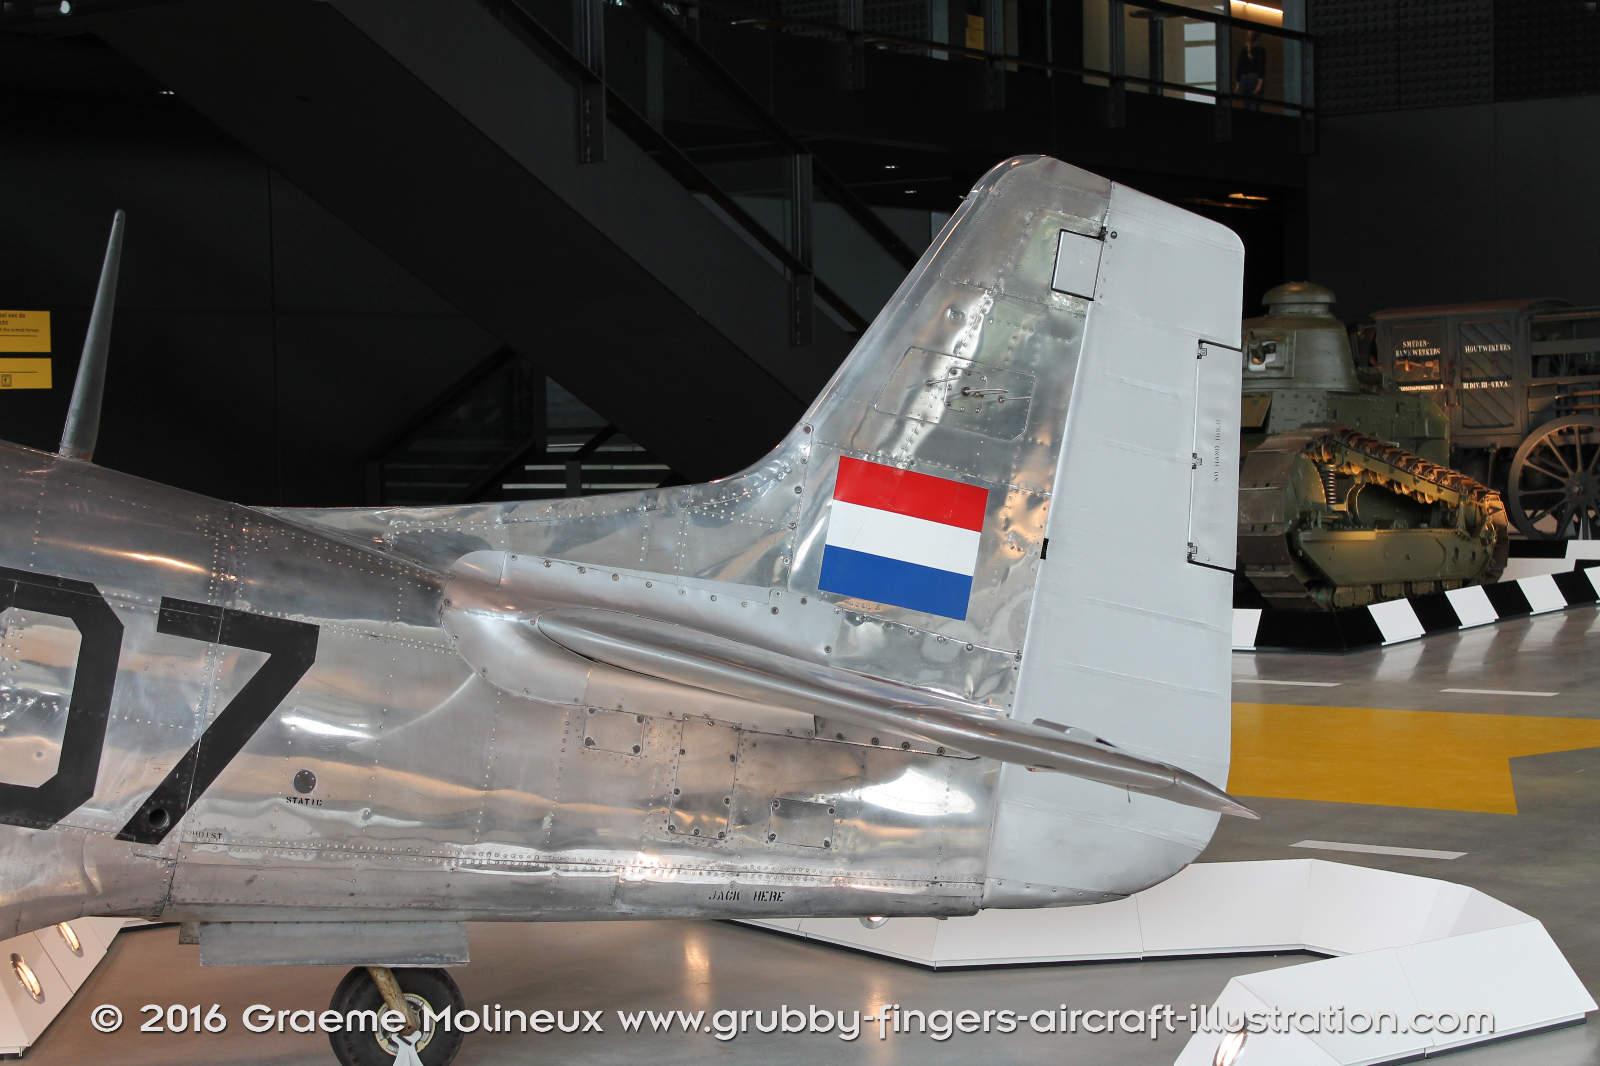 NAA_P-51D_Mustang_Walkaround_H-307_Dutch_Air_Force_2015_13_GraemeMolineux